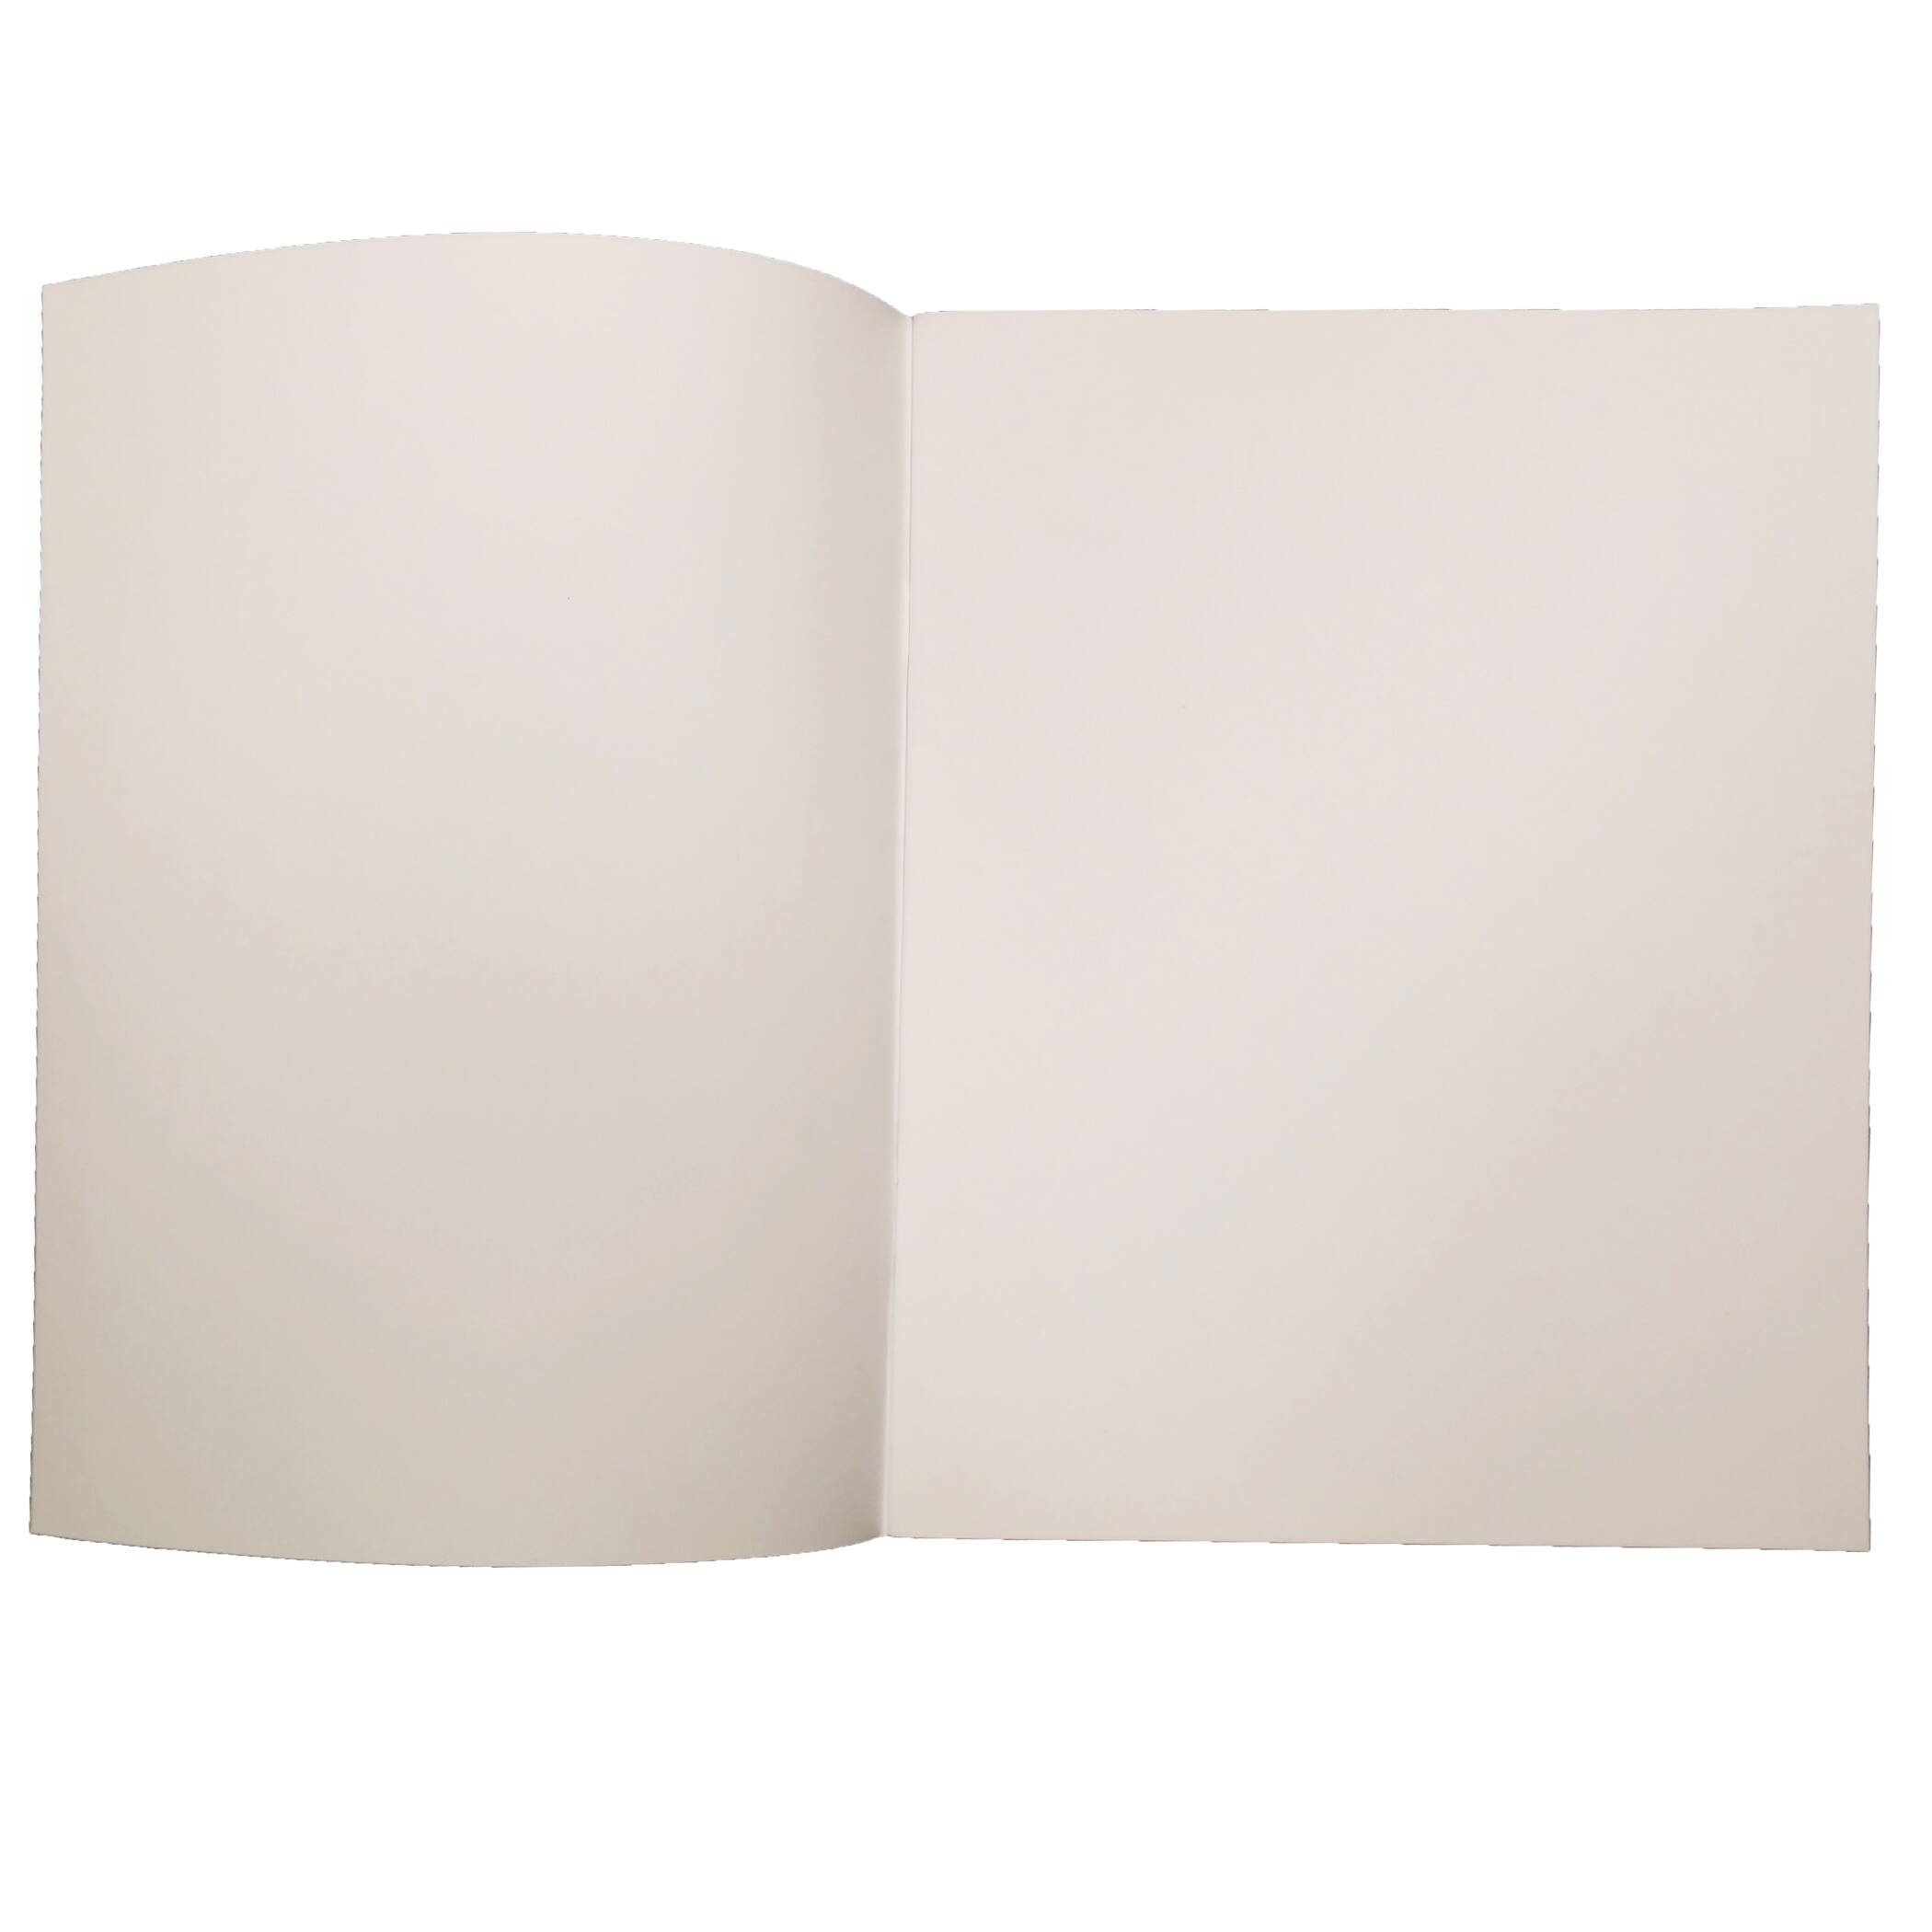 plain white book cover